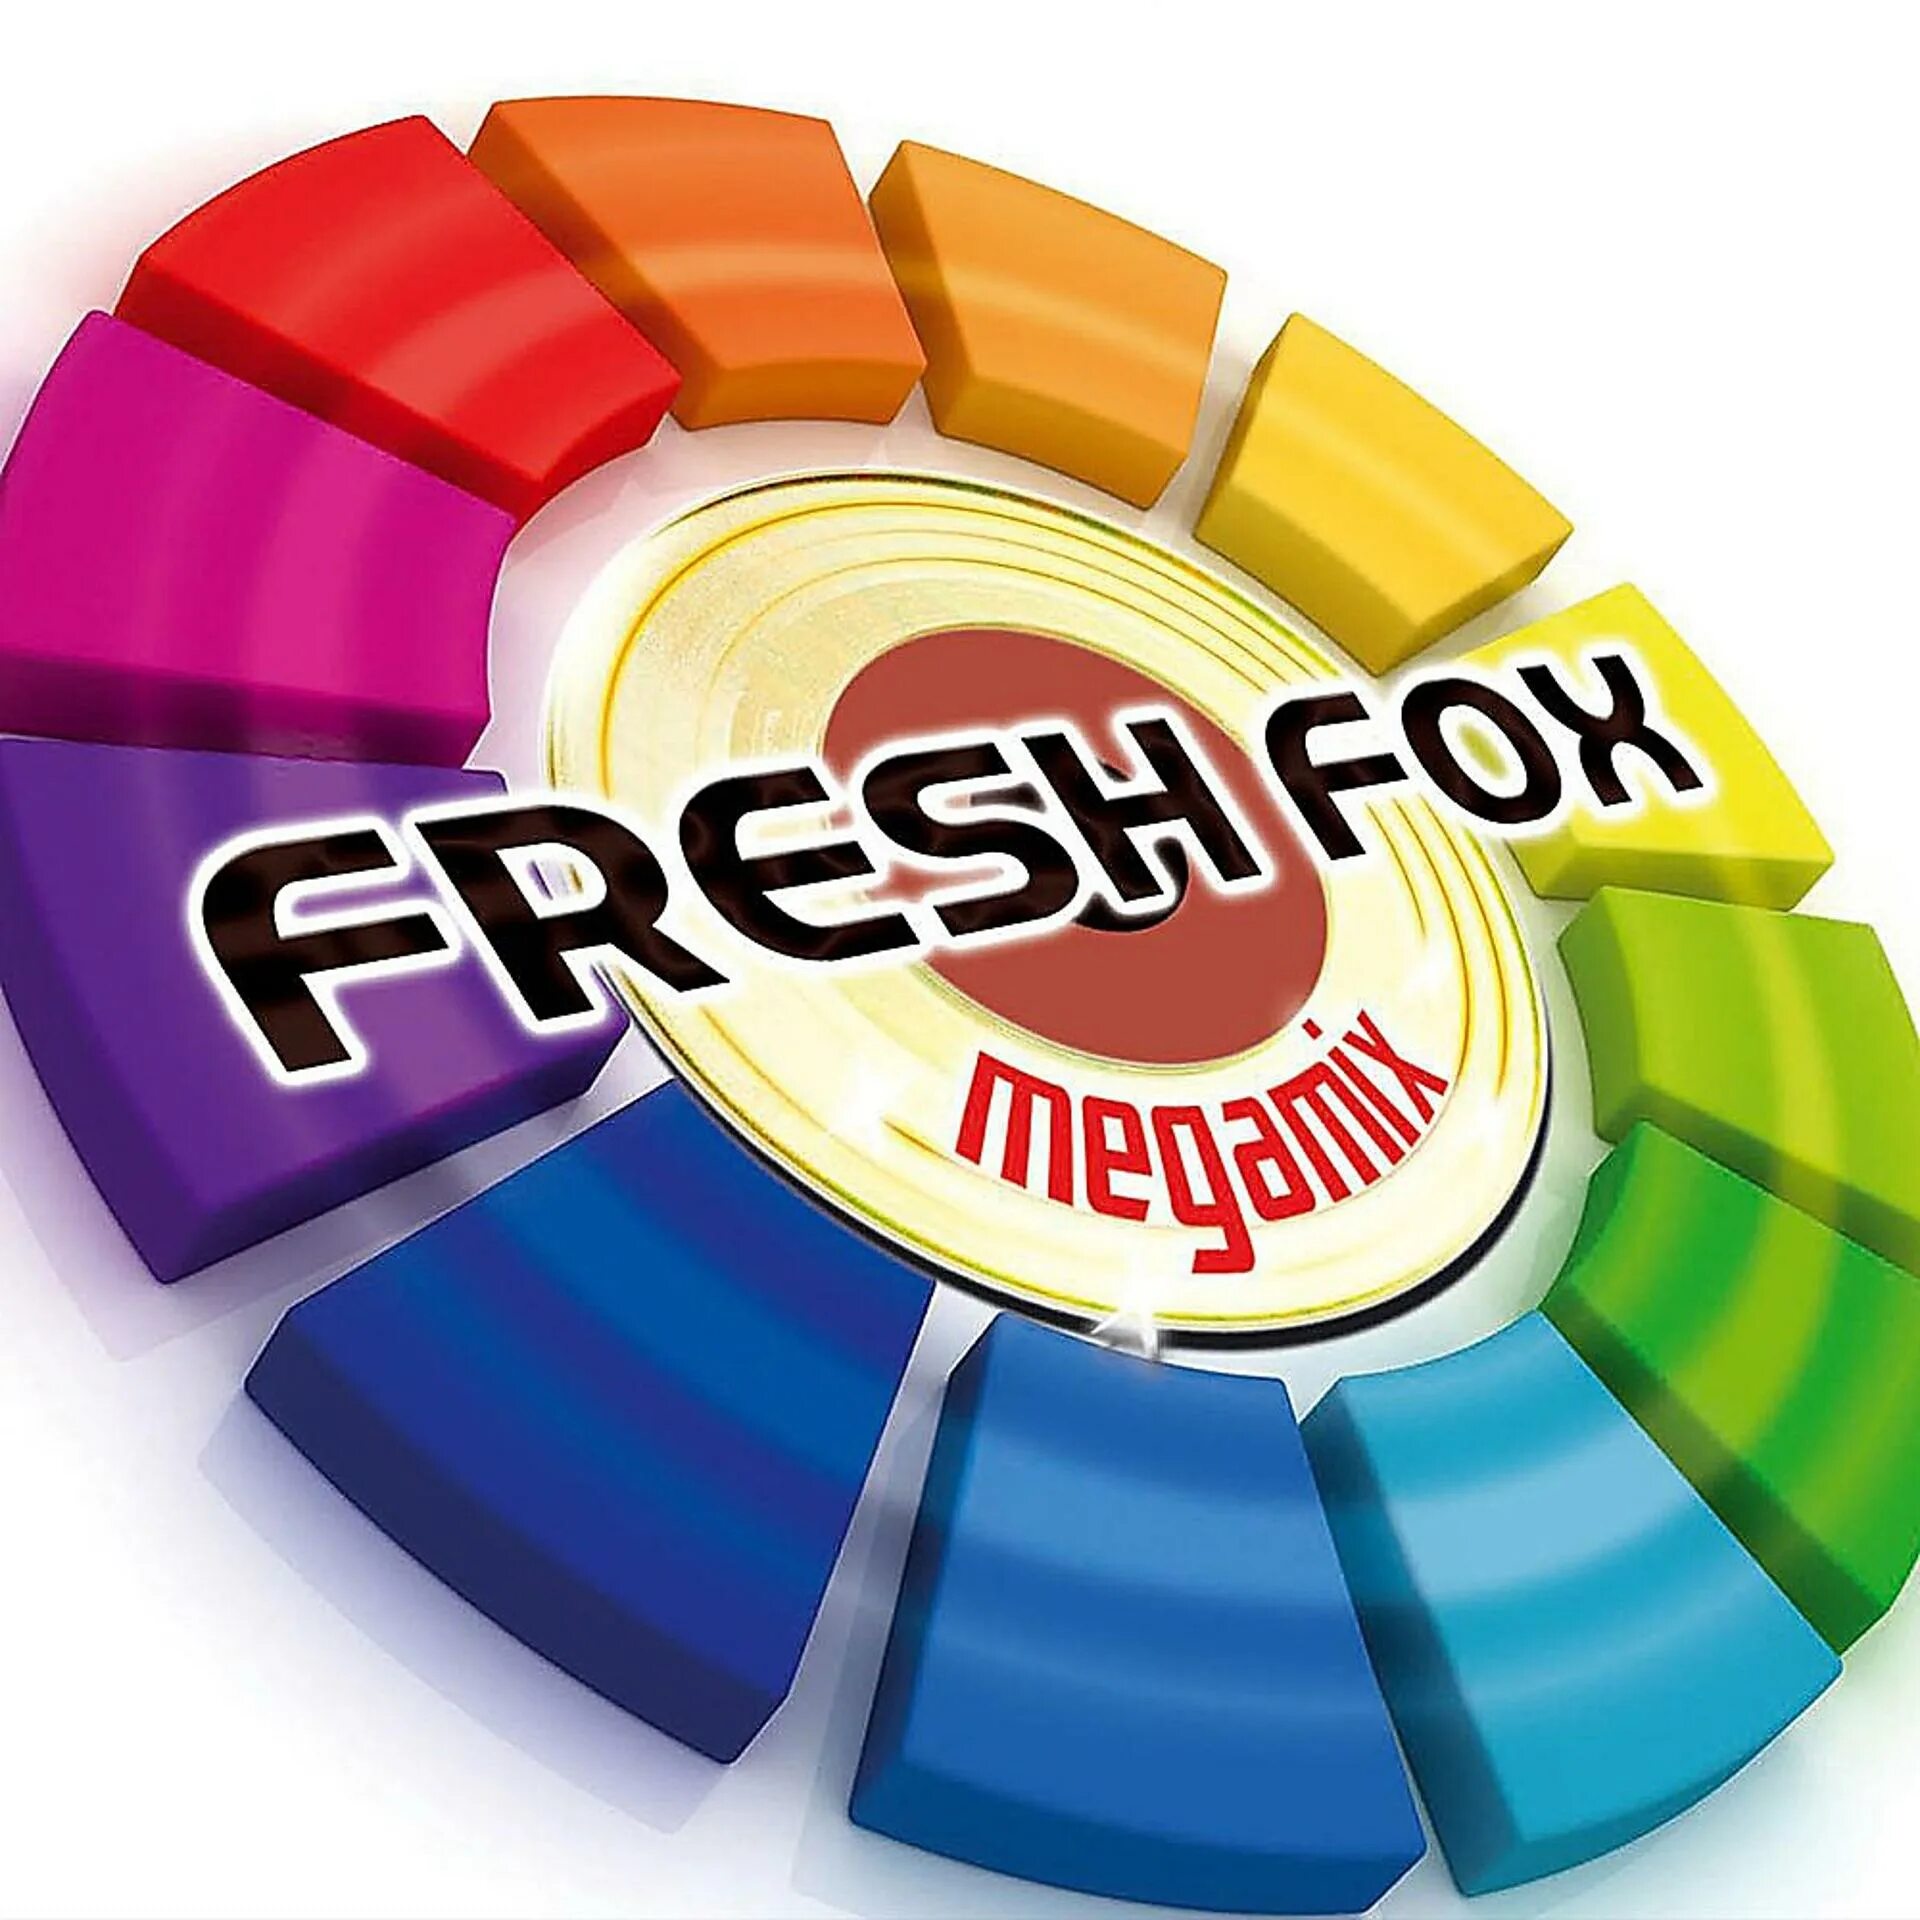 Fresh Fox Megamix. ООО мегамикс. Fresh Fox 2010.Megamix. Мега Мих. Fresh fox